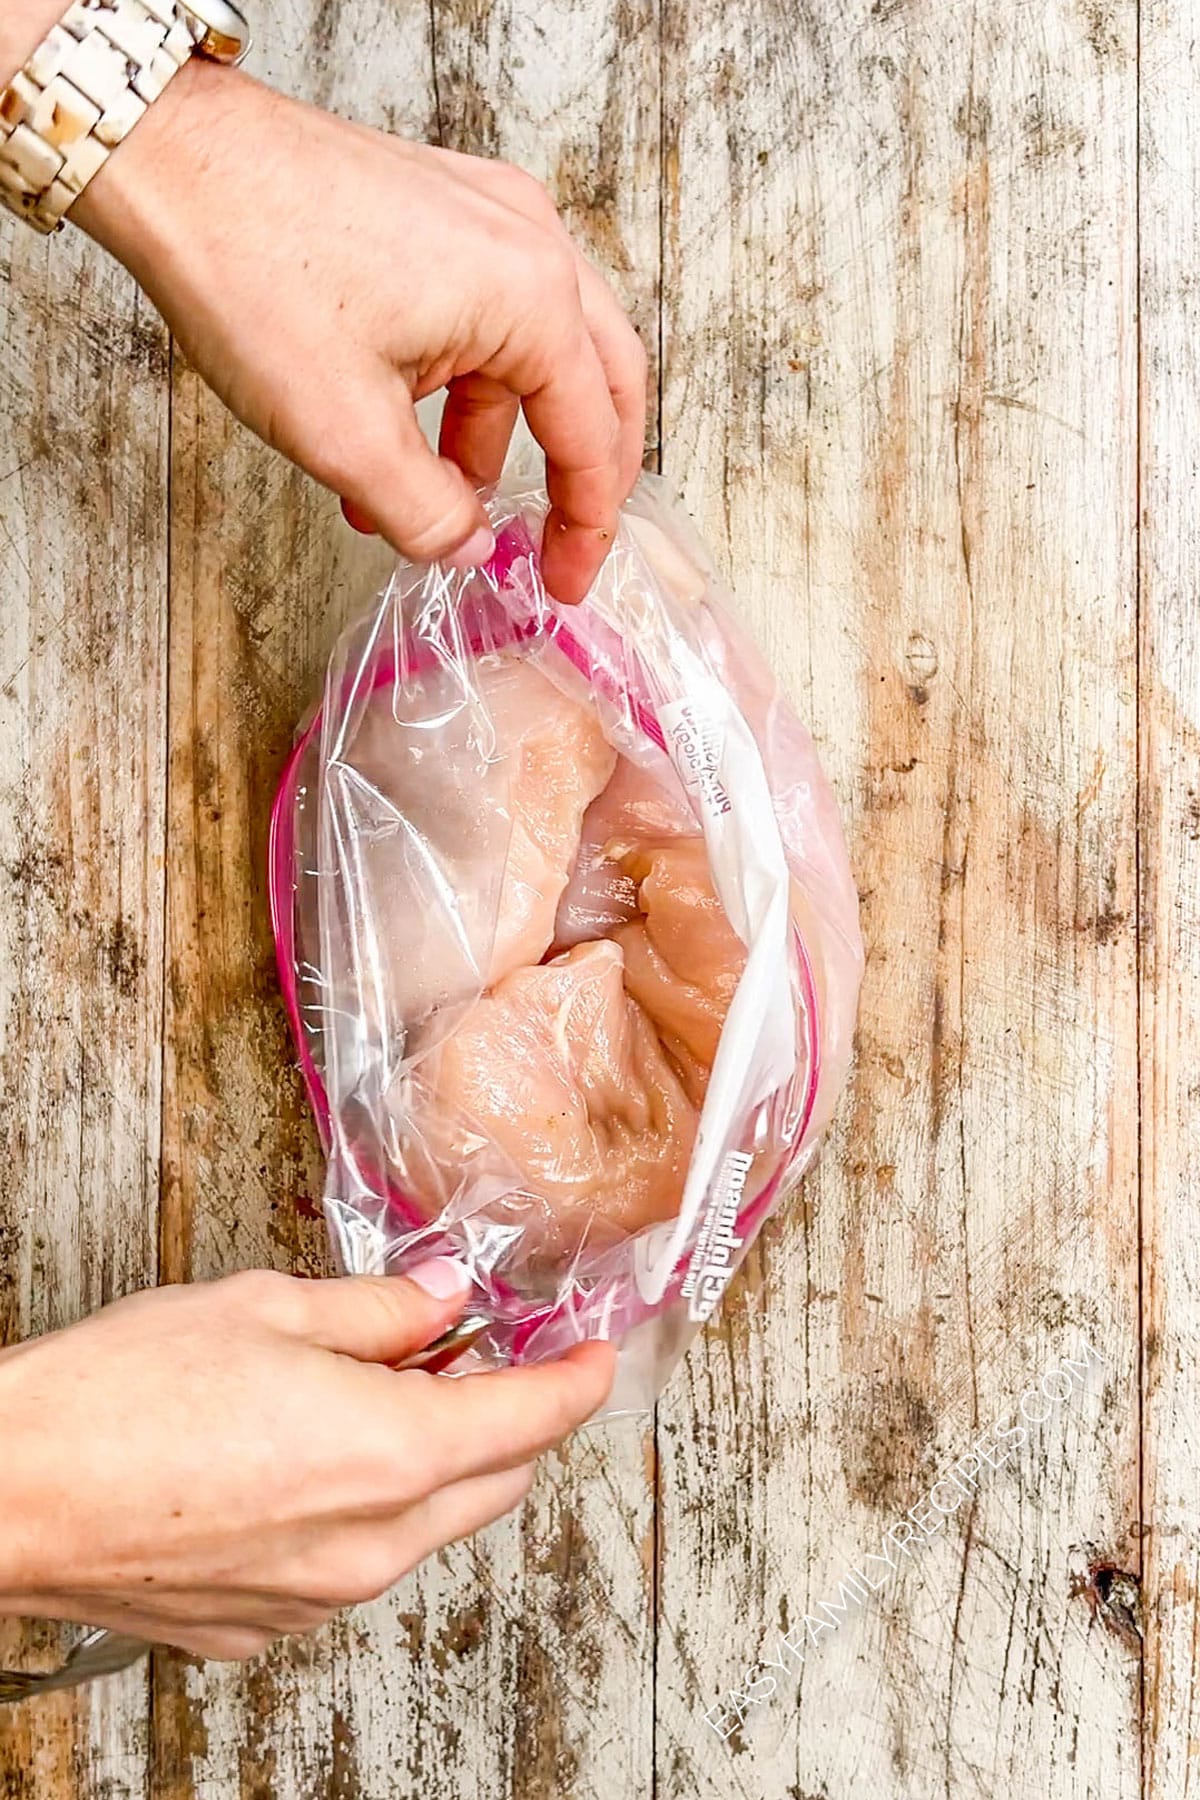 Chicken in a freezer bag prepping for Baja Chicken marinade.